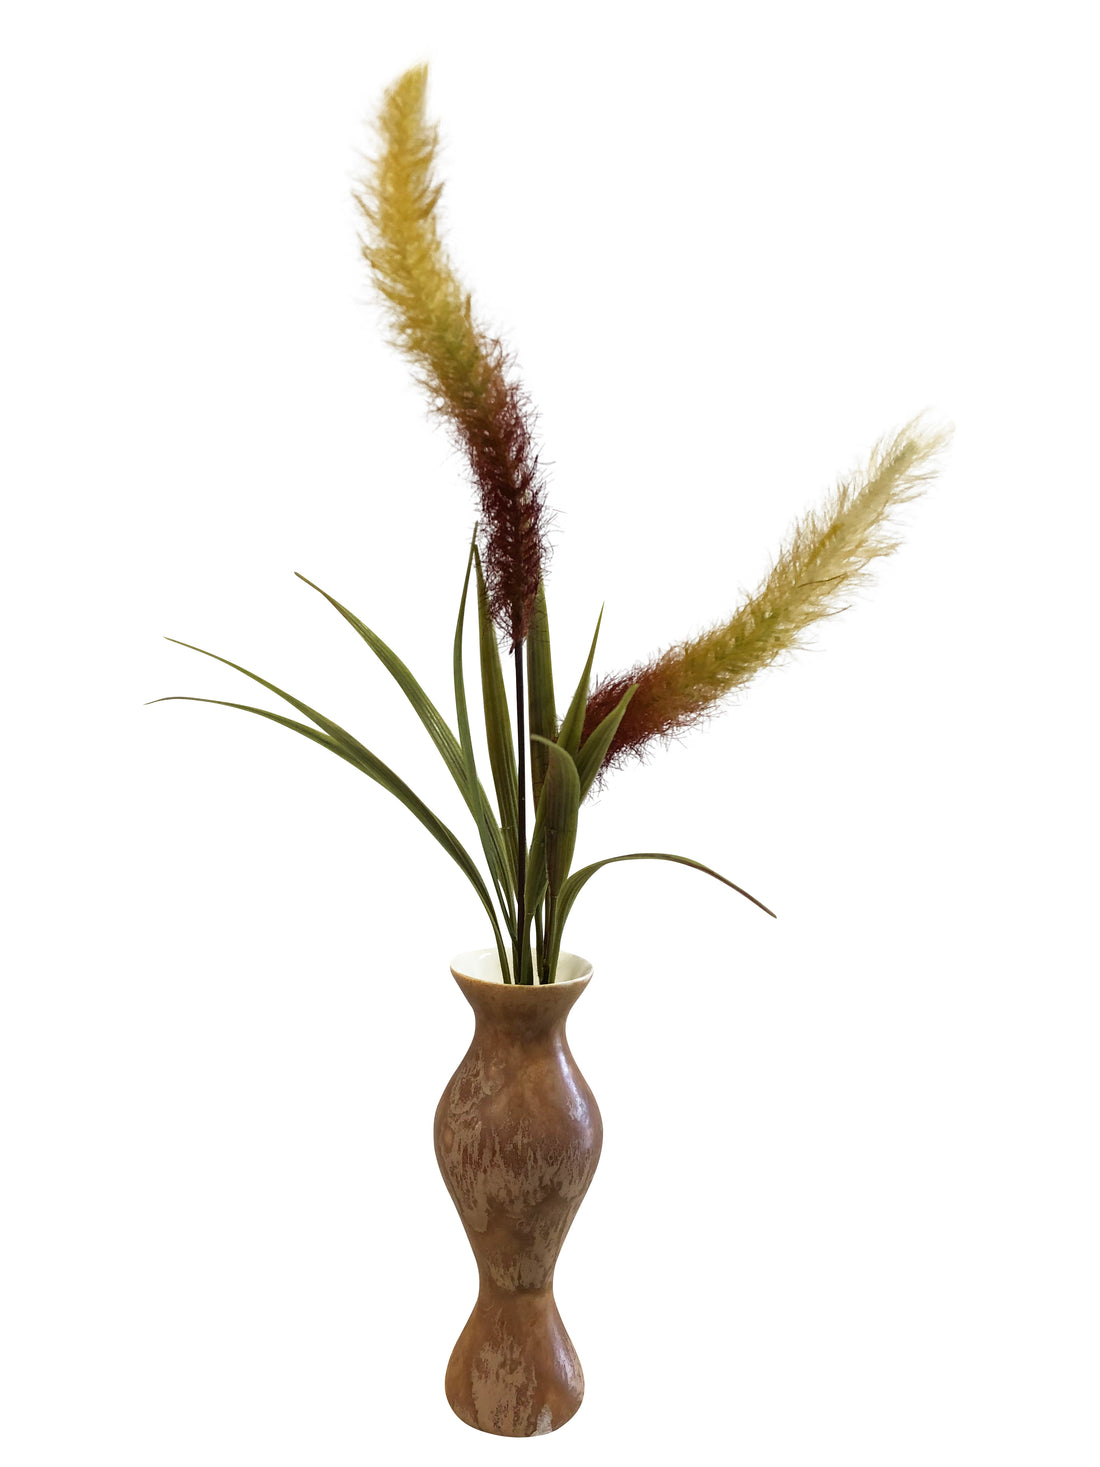 Vase with Wheat Sheaf